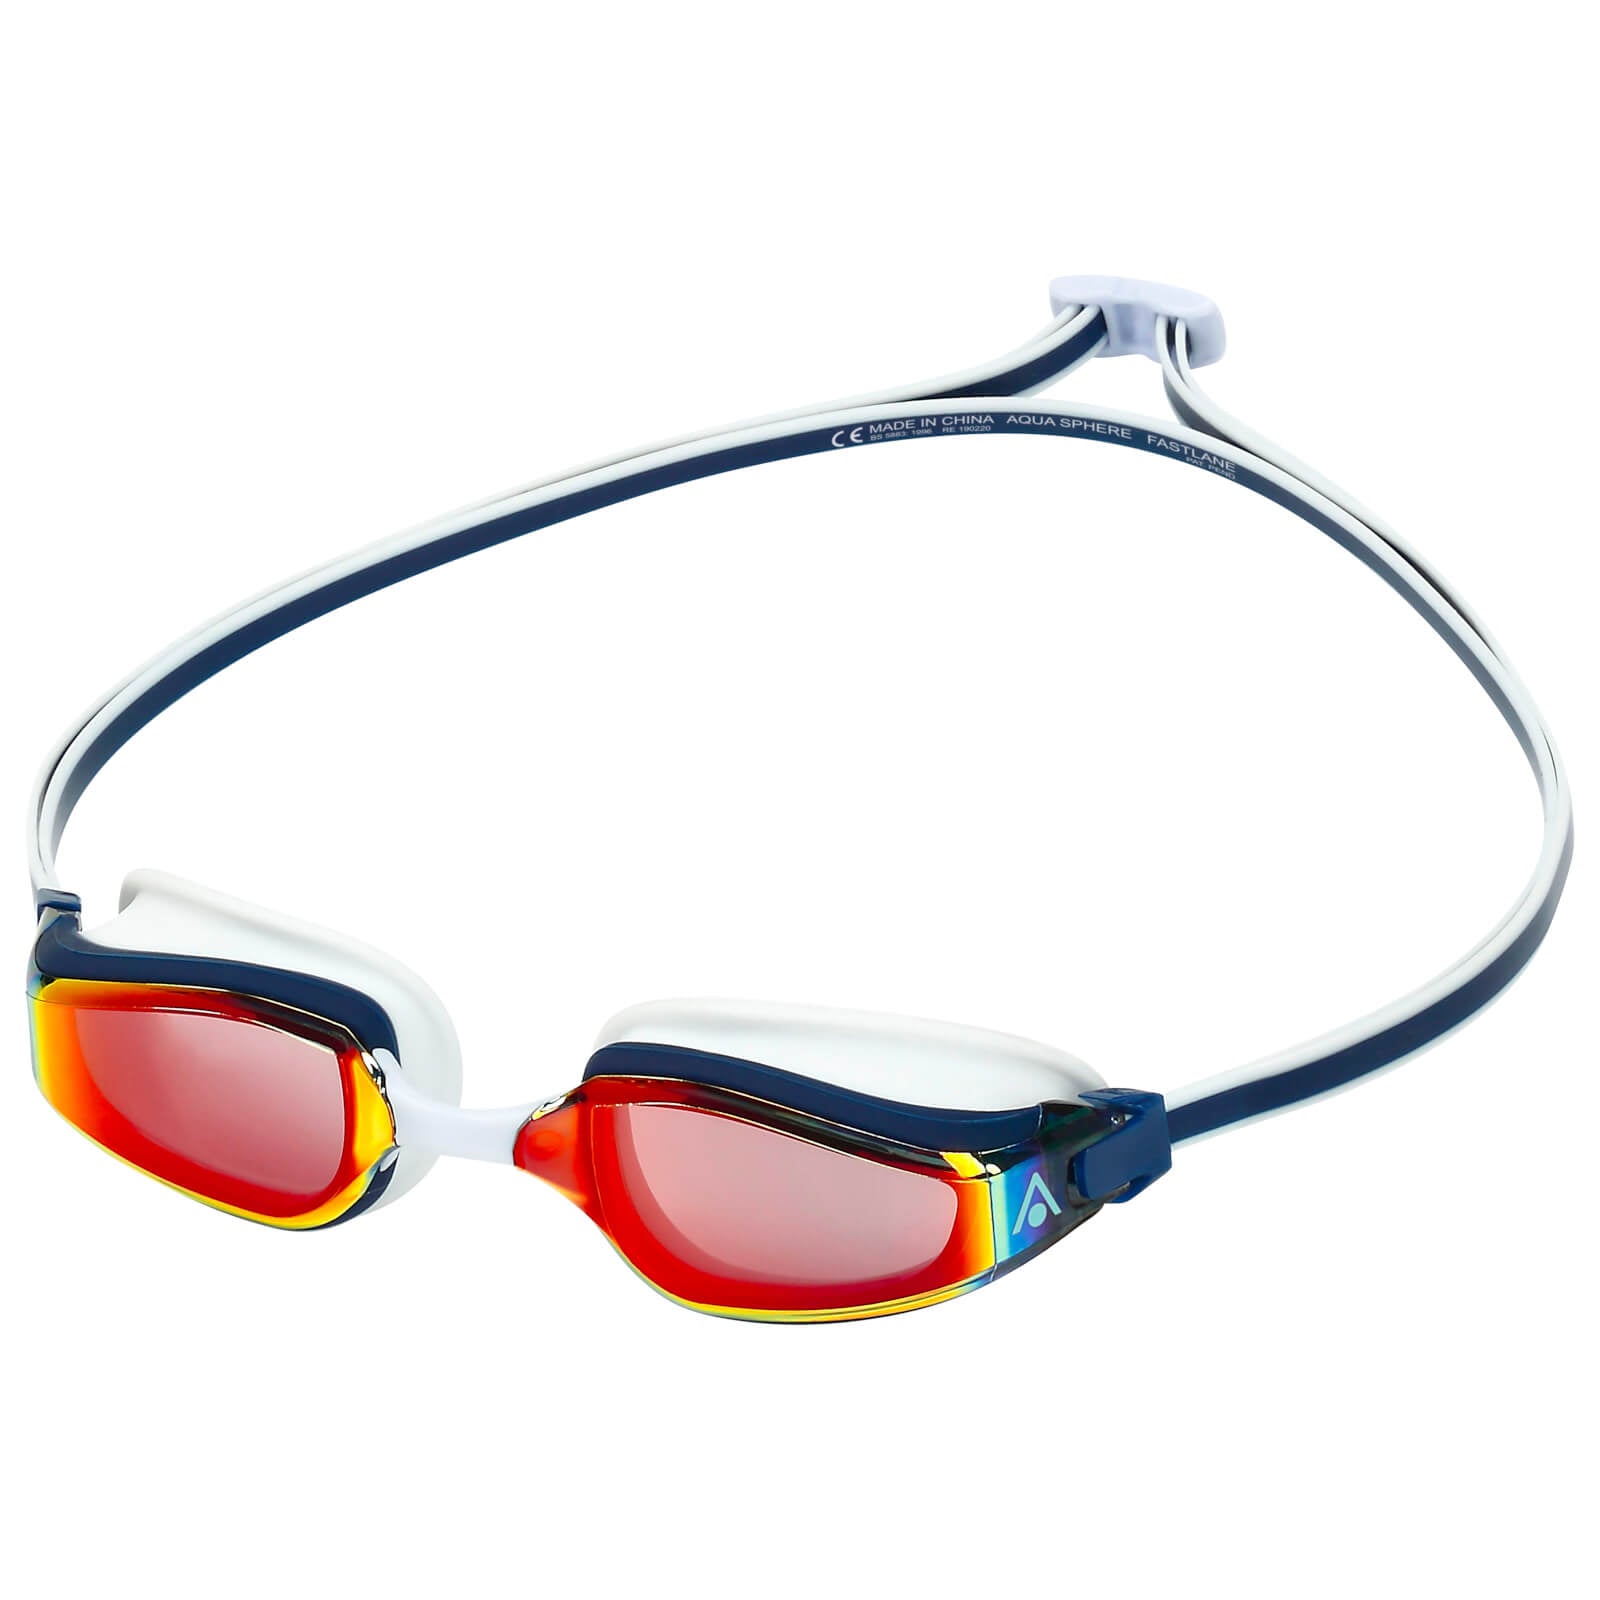 Men's Swimming Goggles Aqua Sphere Fastlane Adult Fitness Pool Navy Blue - Red Titanium Mirror